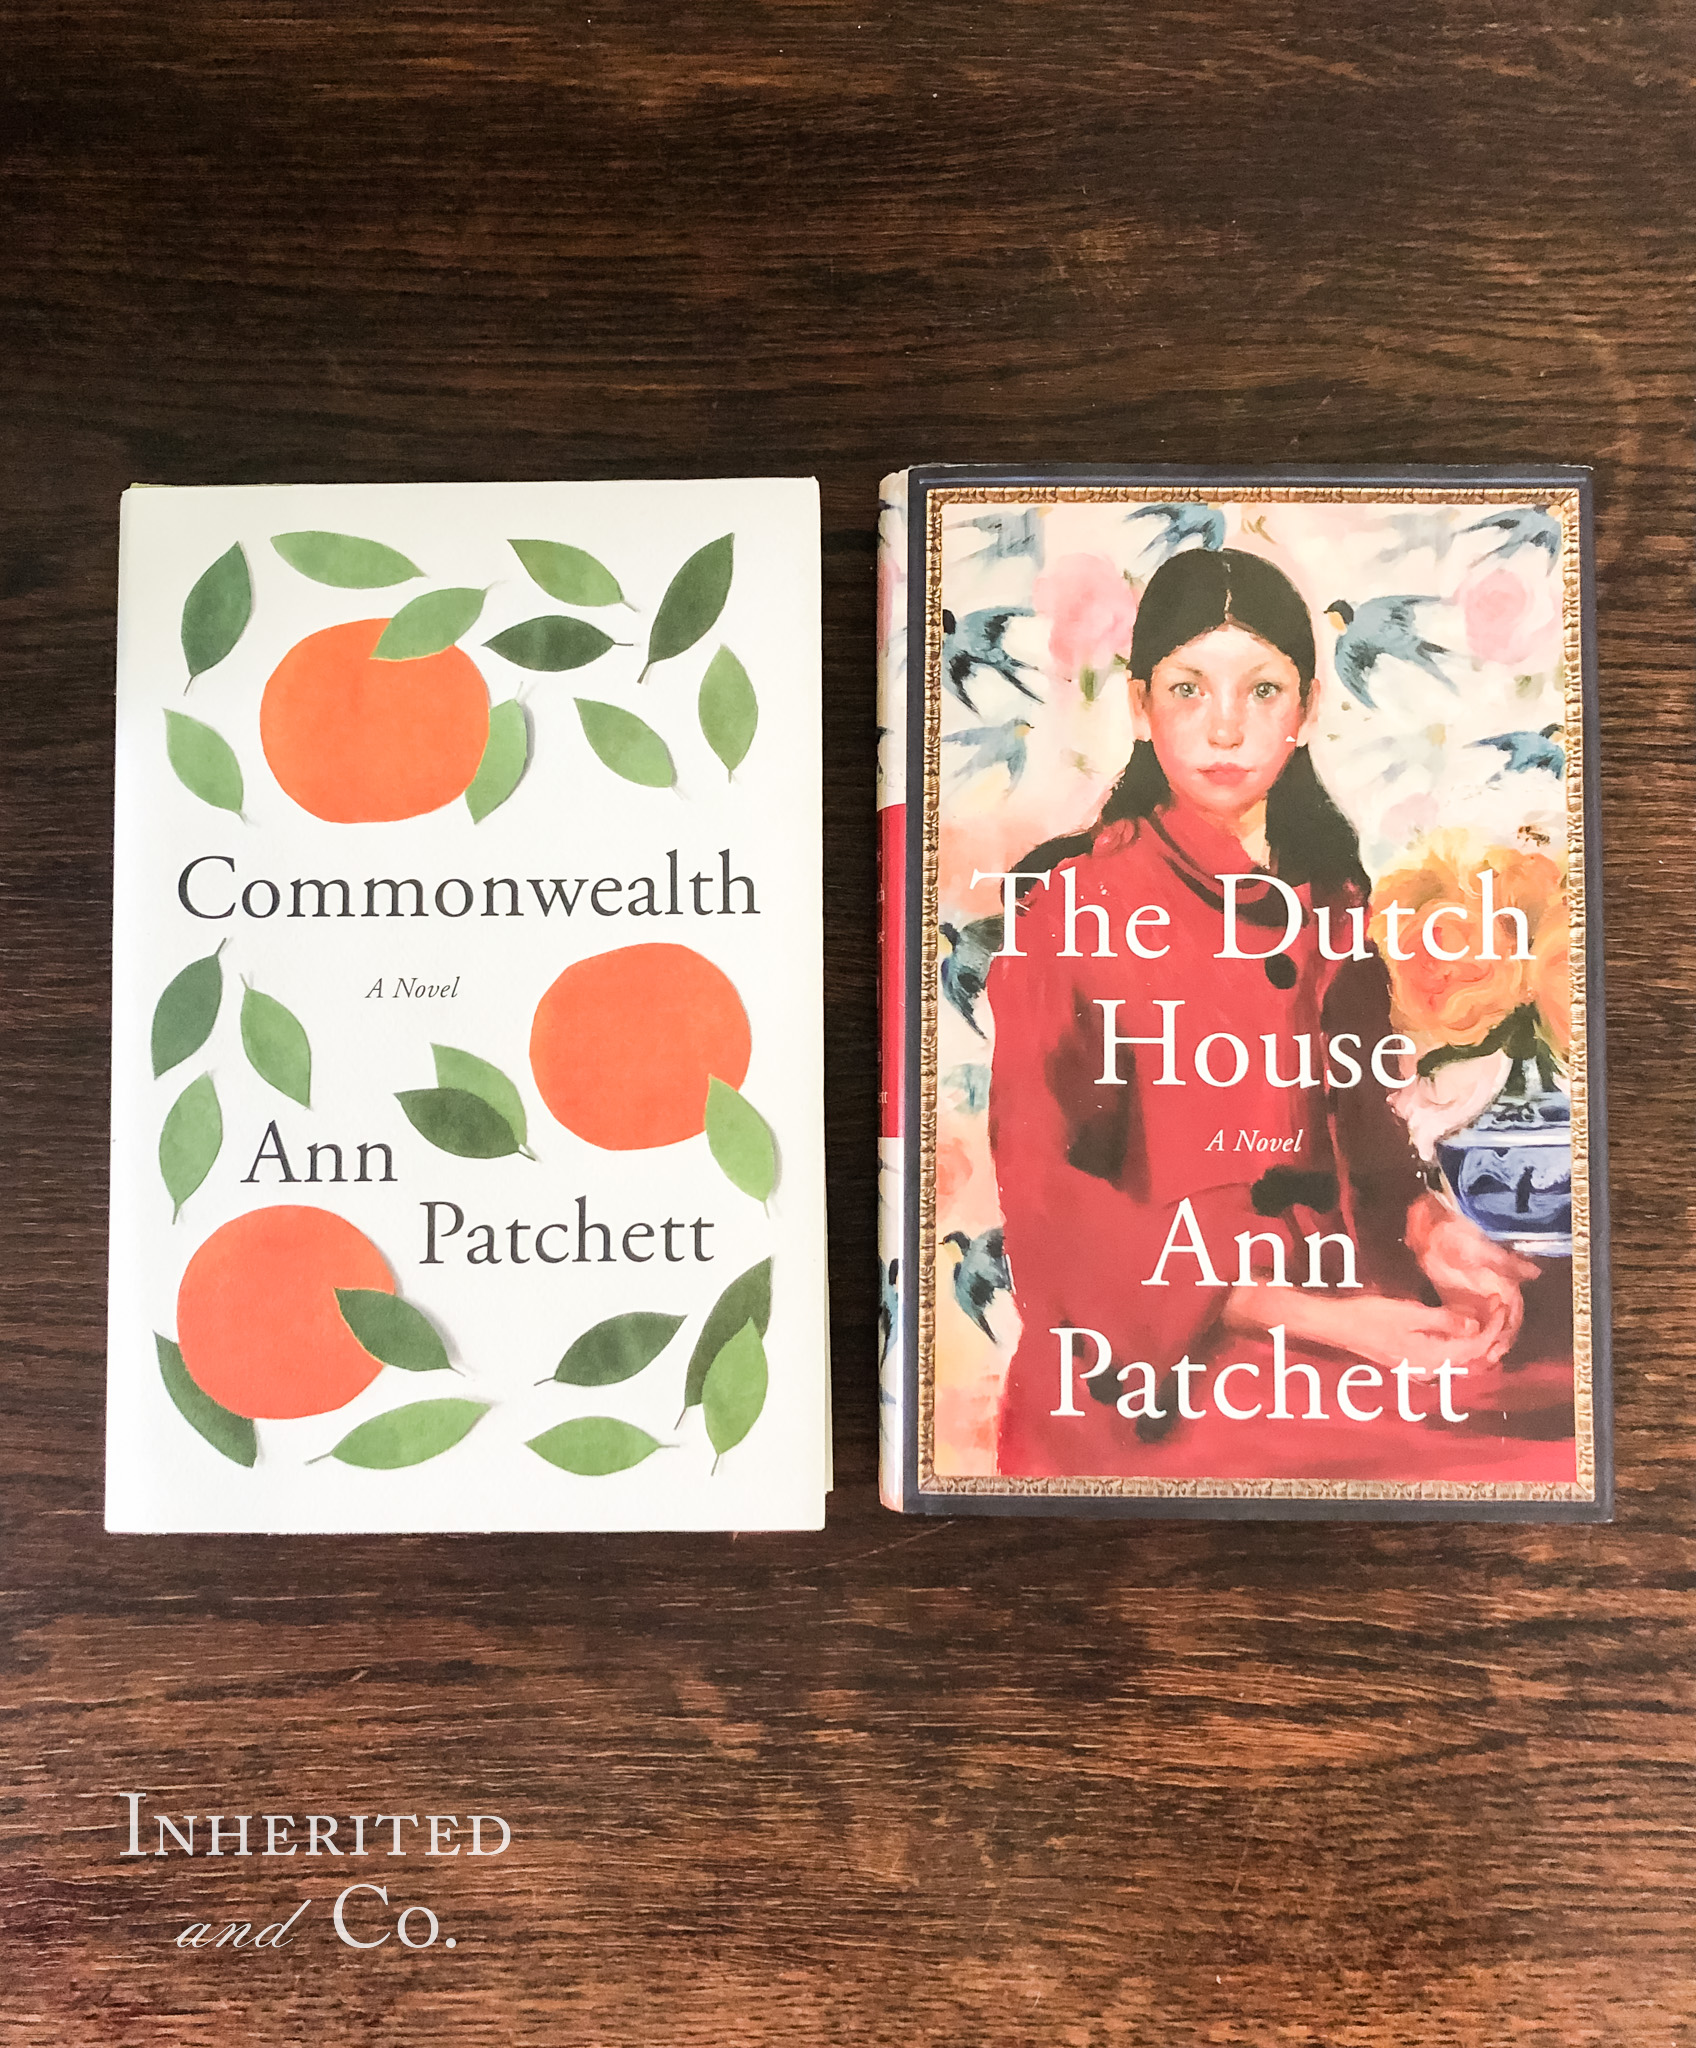 Pair of books by Ann Patchett